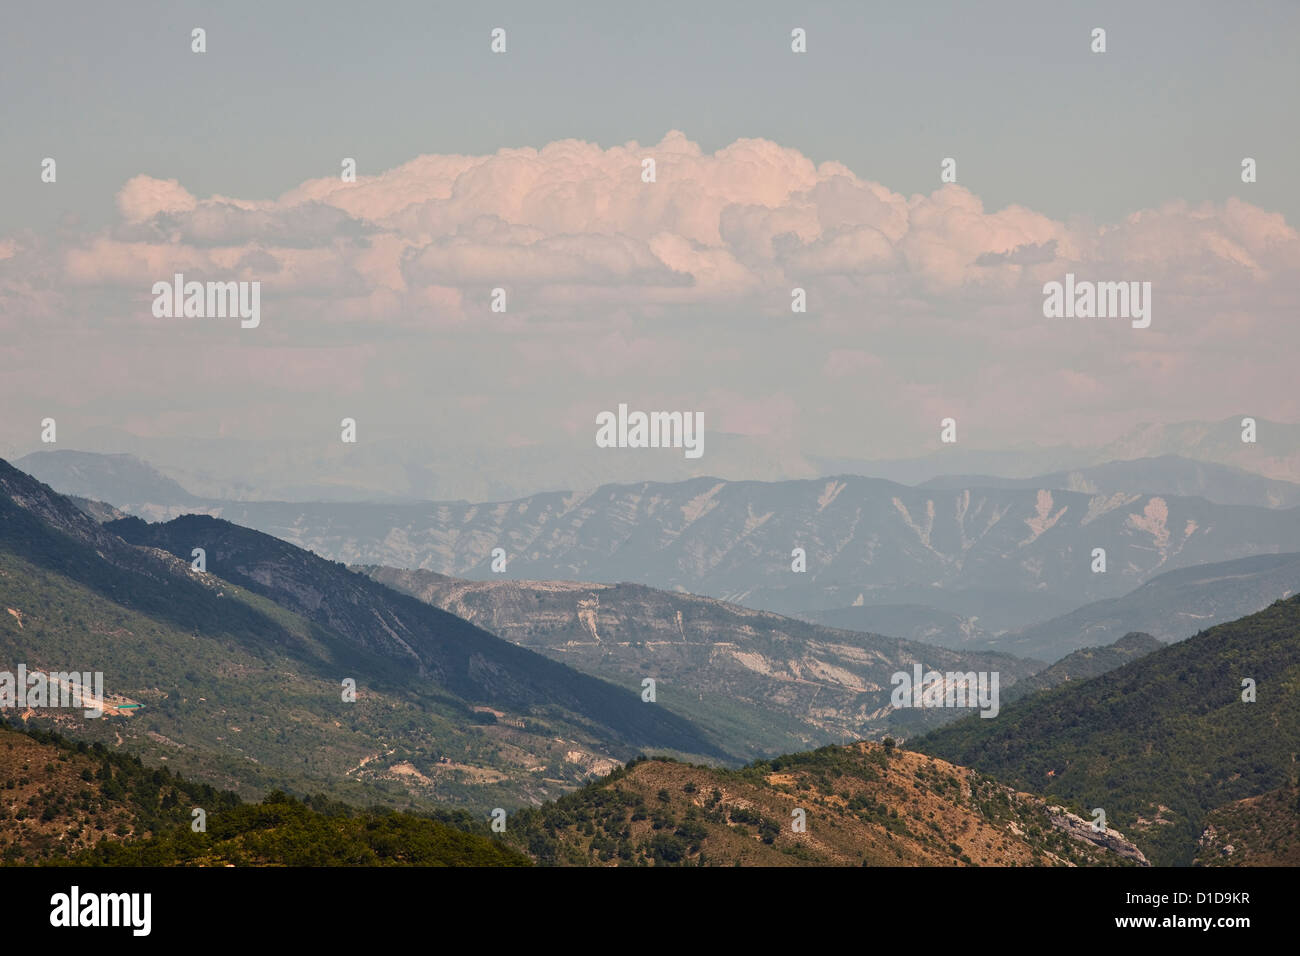 The view towards Montagne de Lure on the border of Alpes-de-Haute-Provence and Drome. Stock Photo